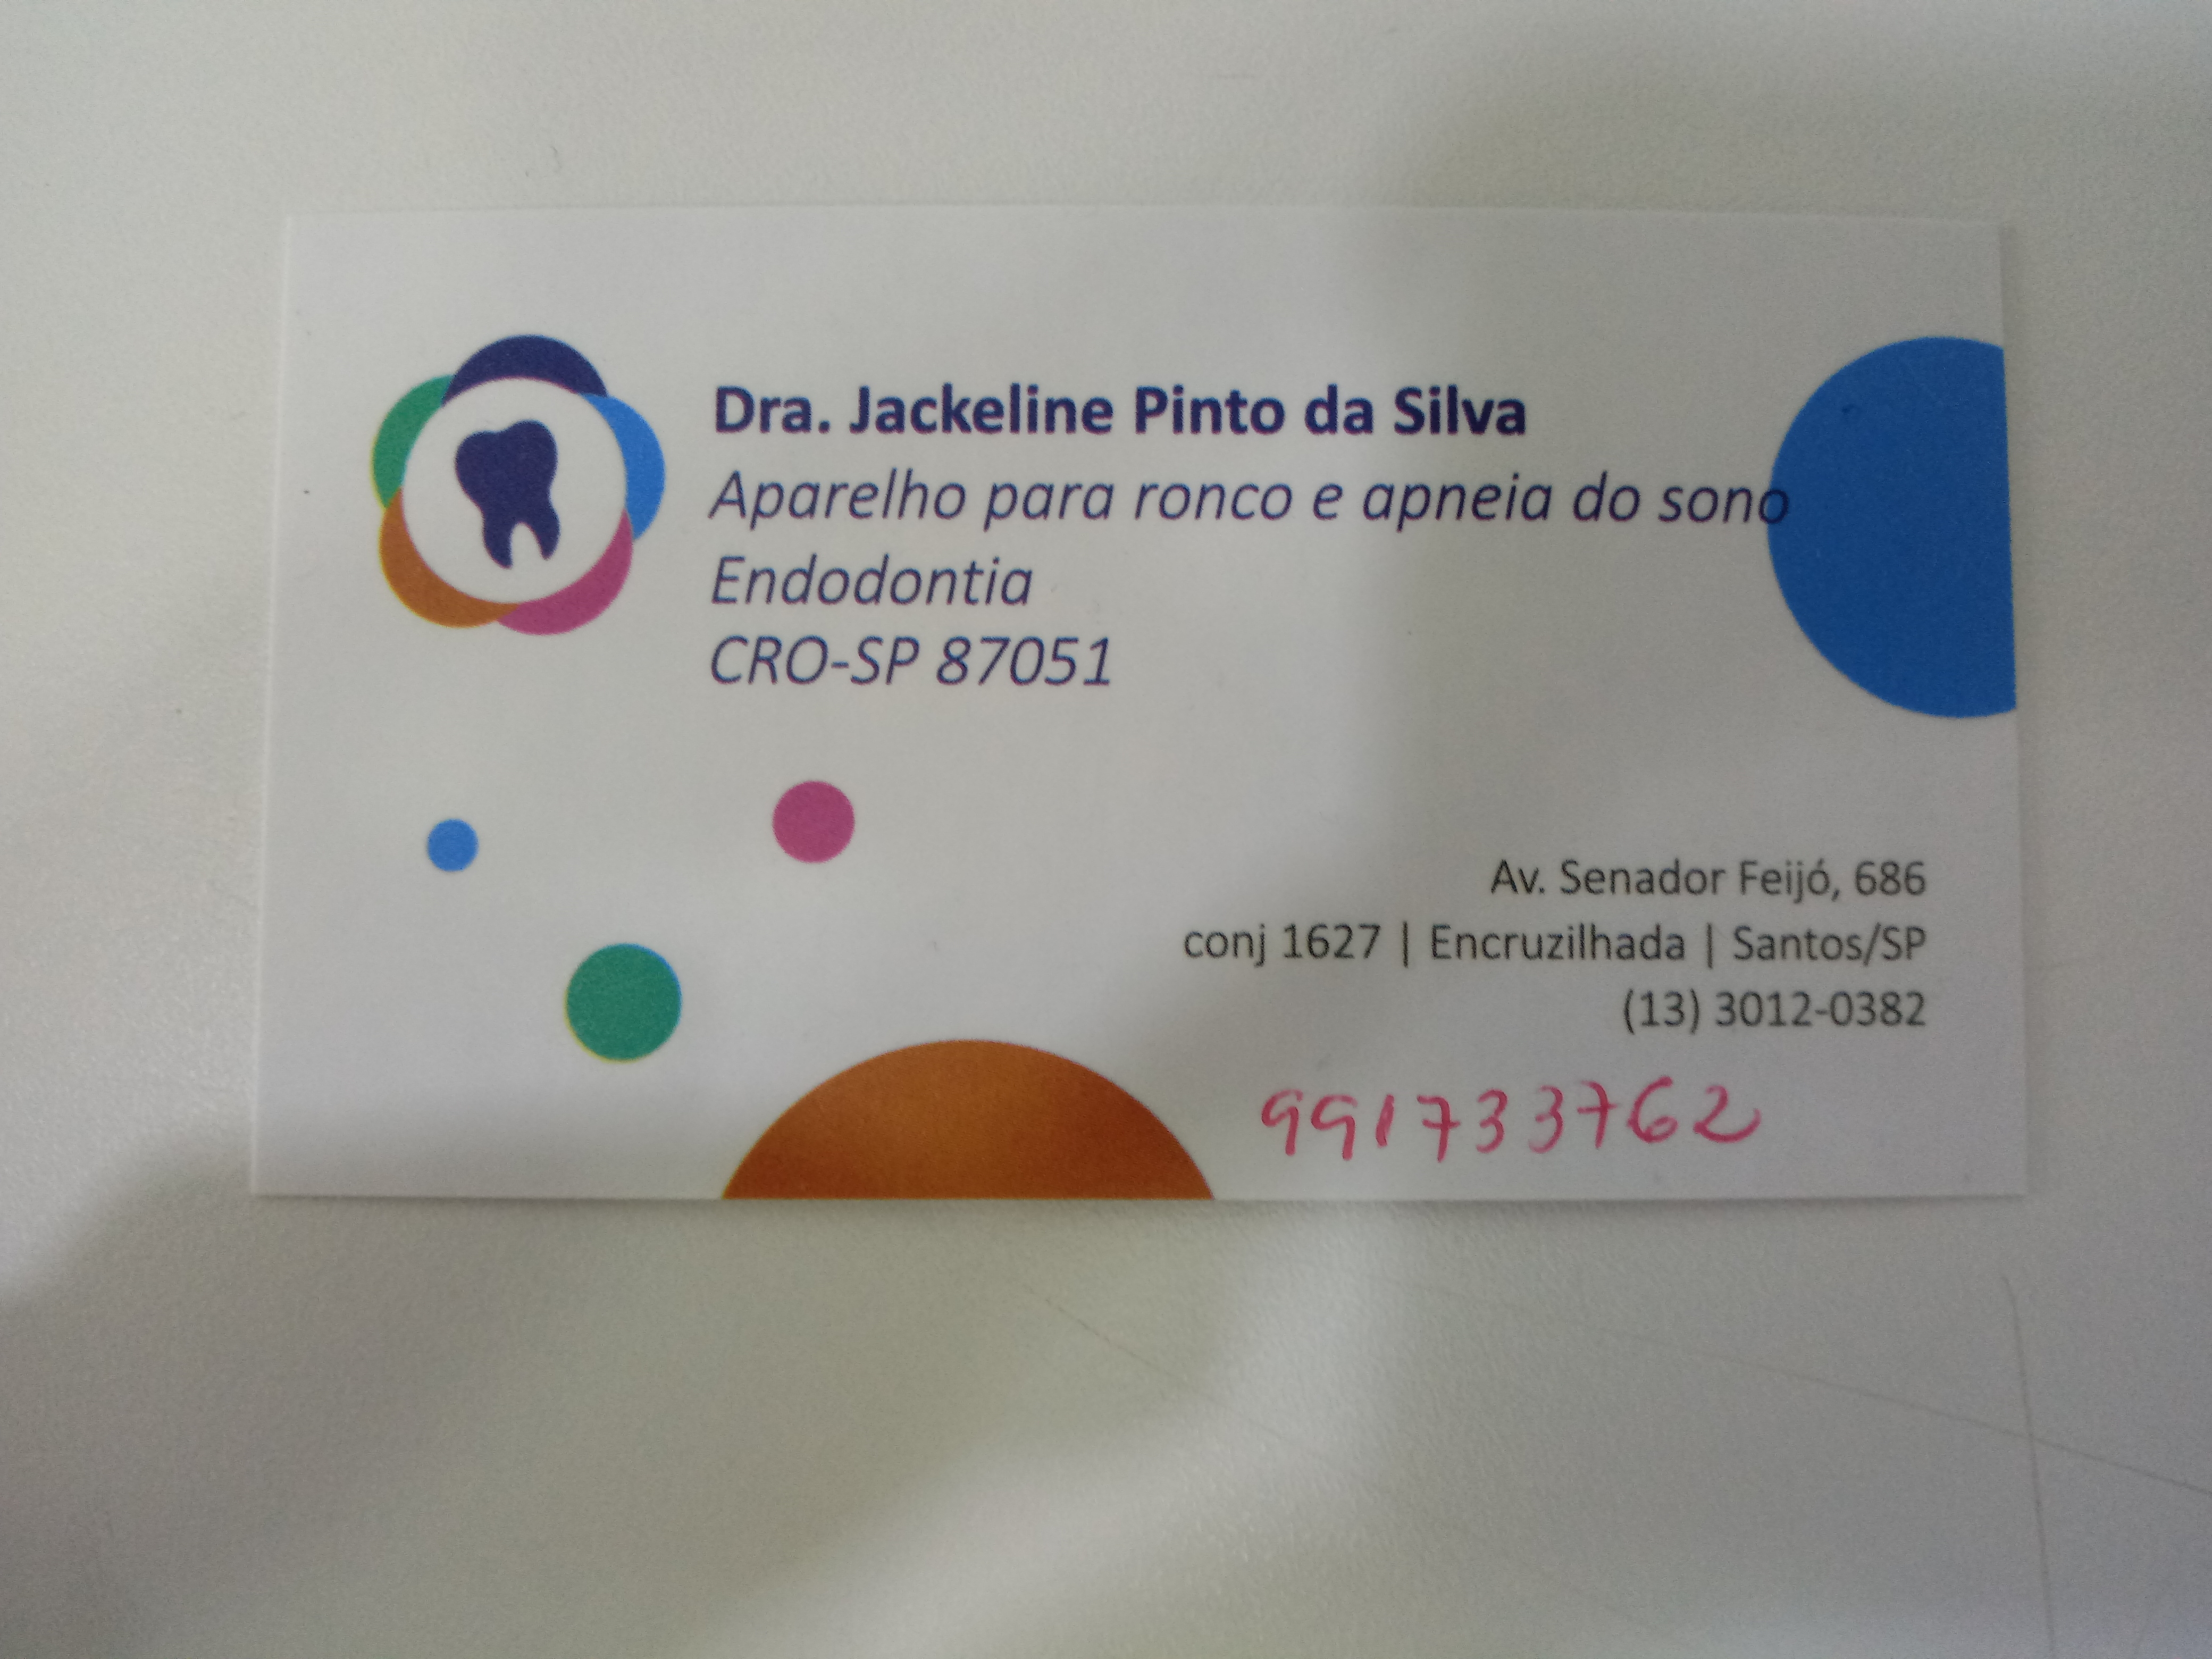 JACKELINE PINTO DA SILVA